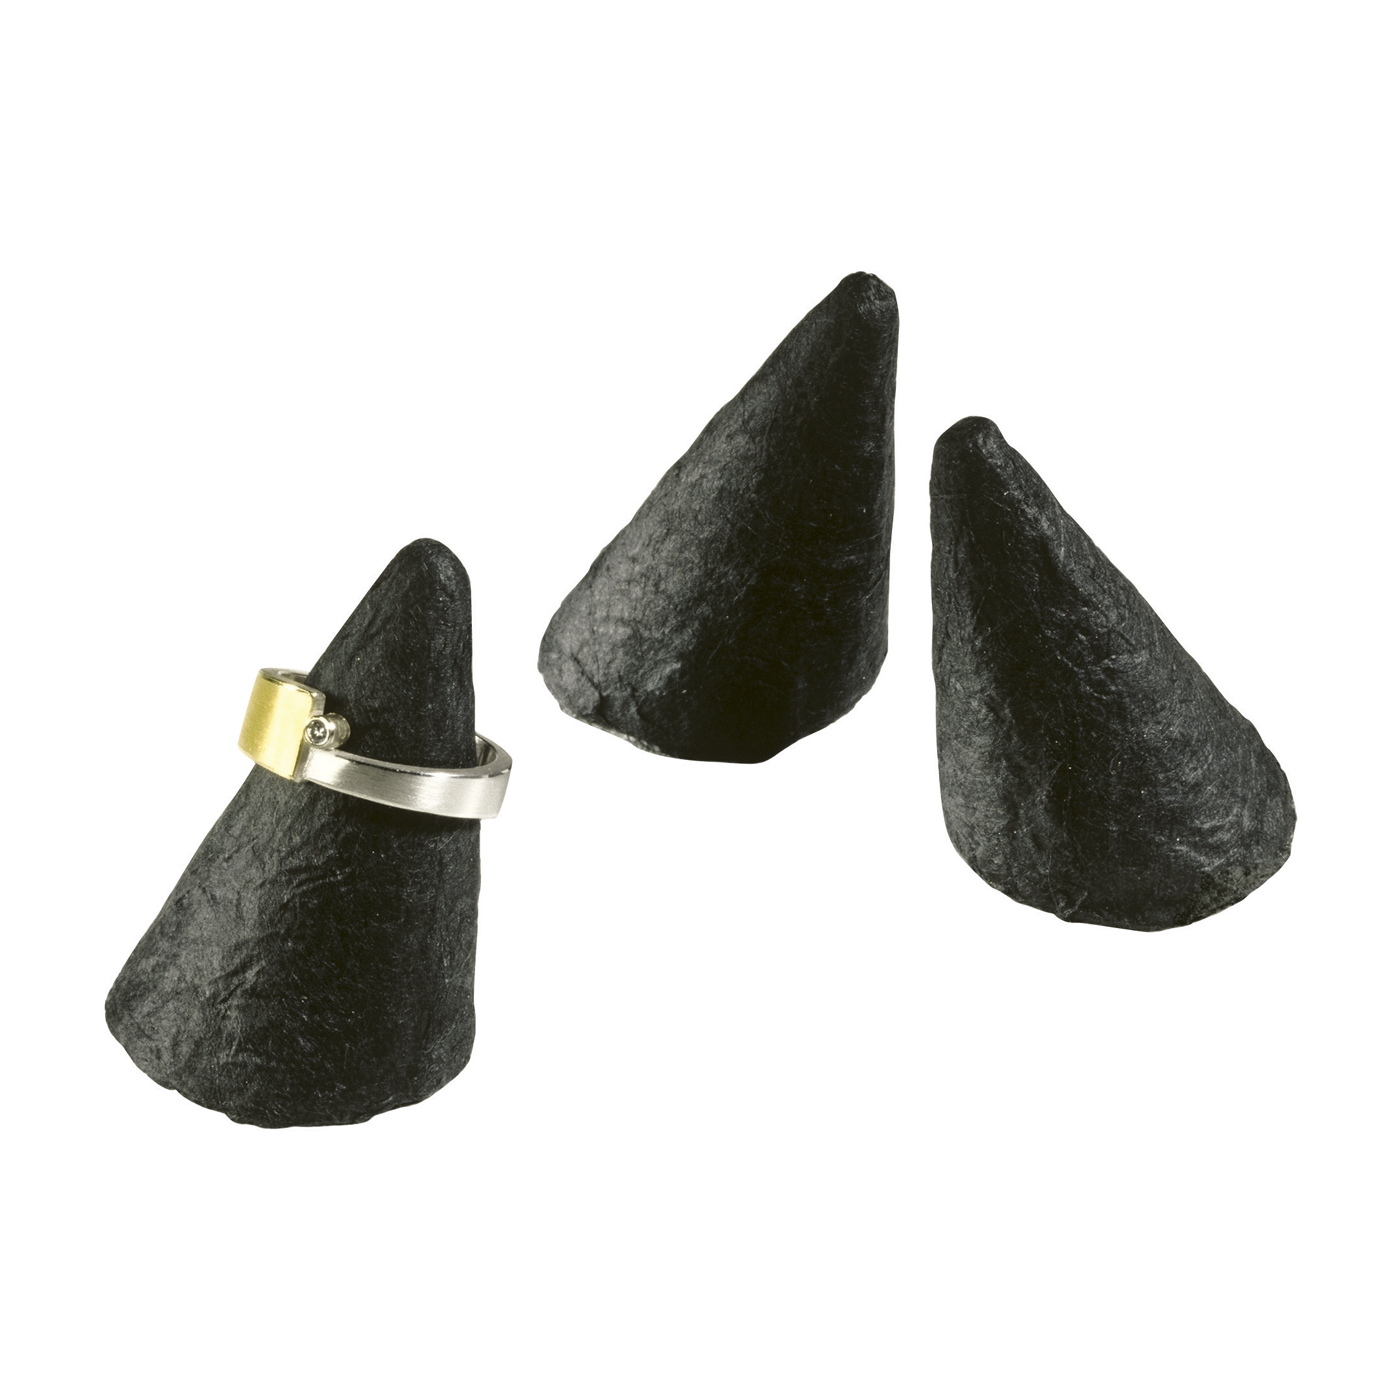 Ringhalter, schwarz, ø 30 mm - 5 Stück